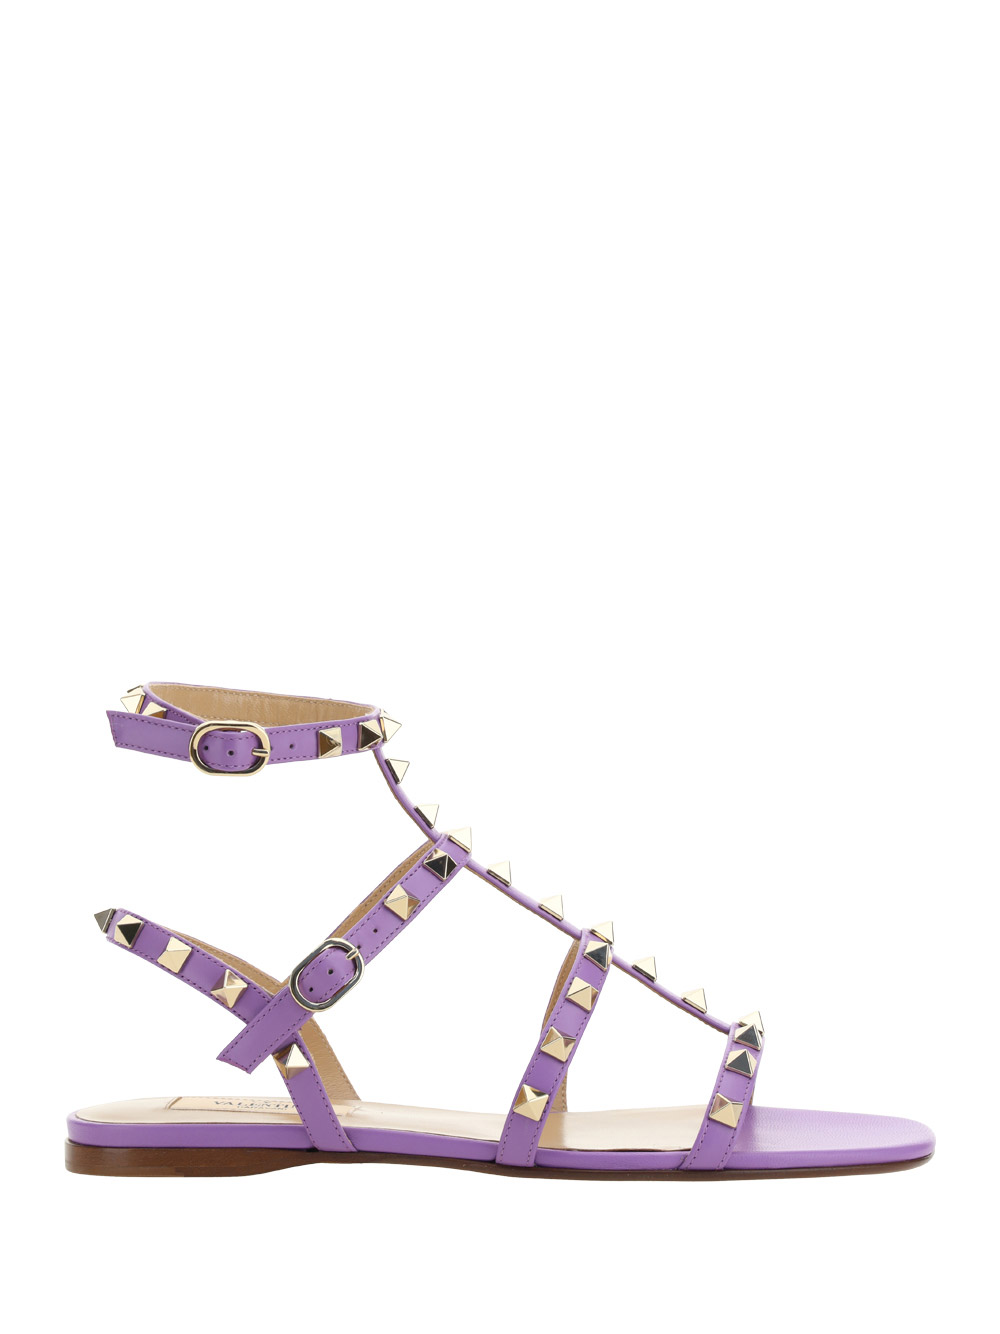 Valentino Garavani Rockstud Sandals In Purple